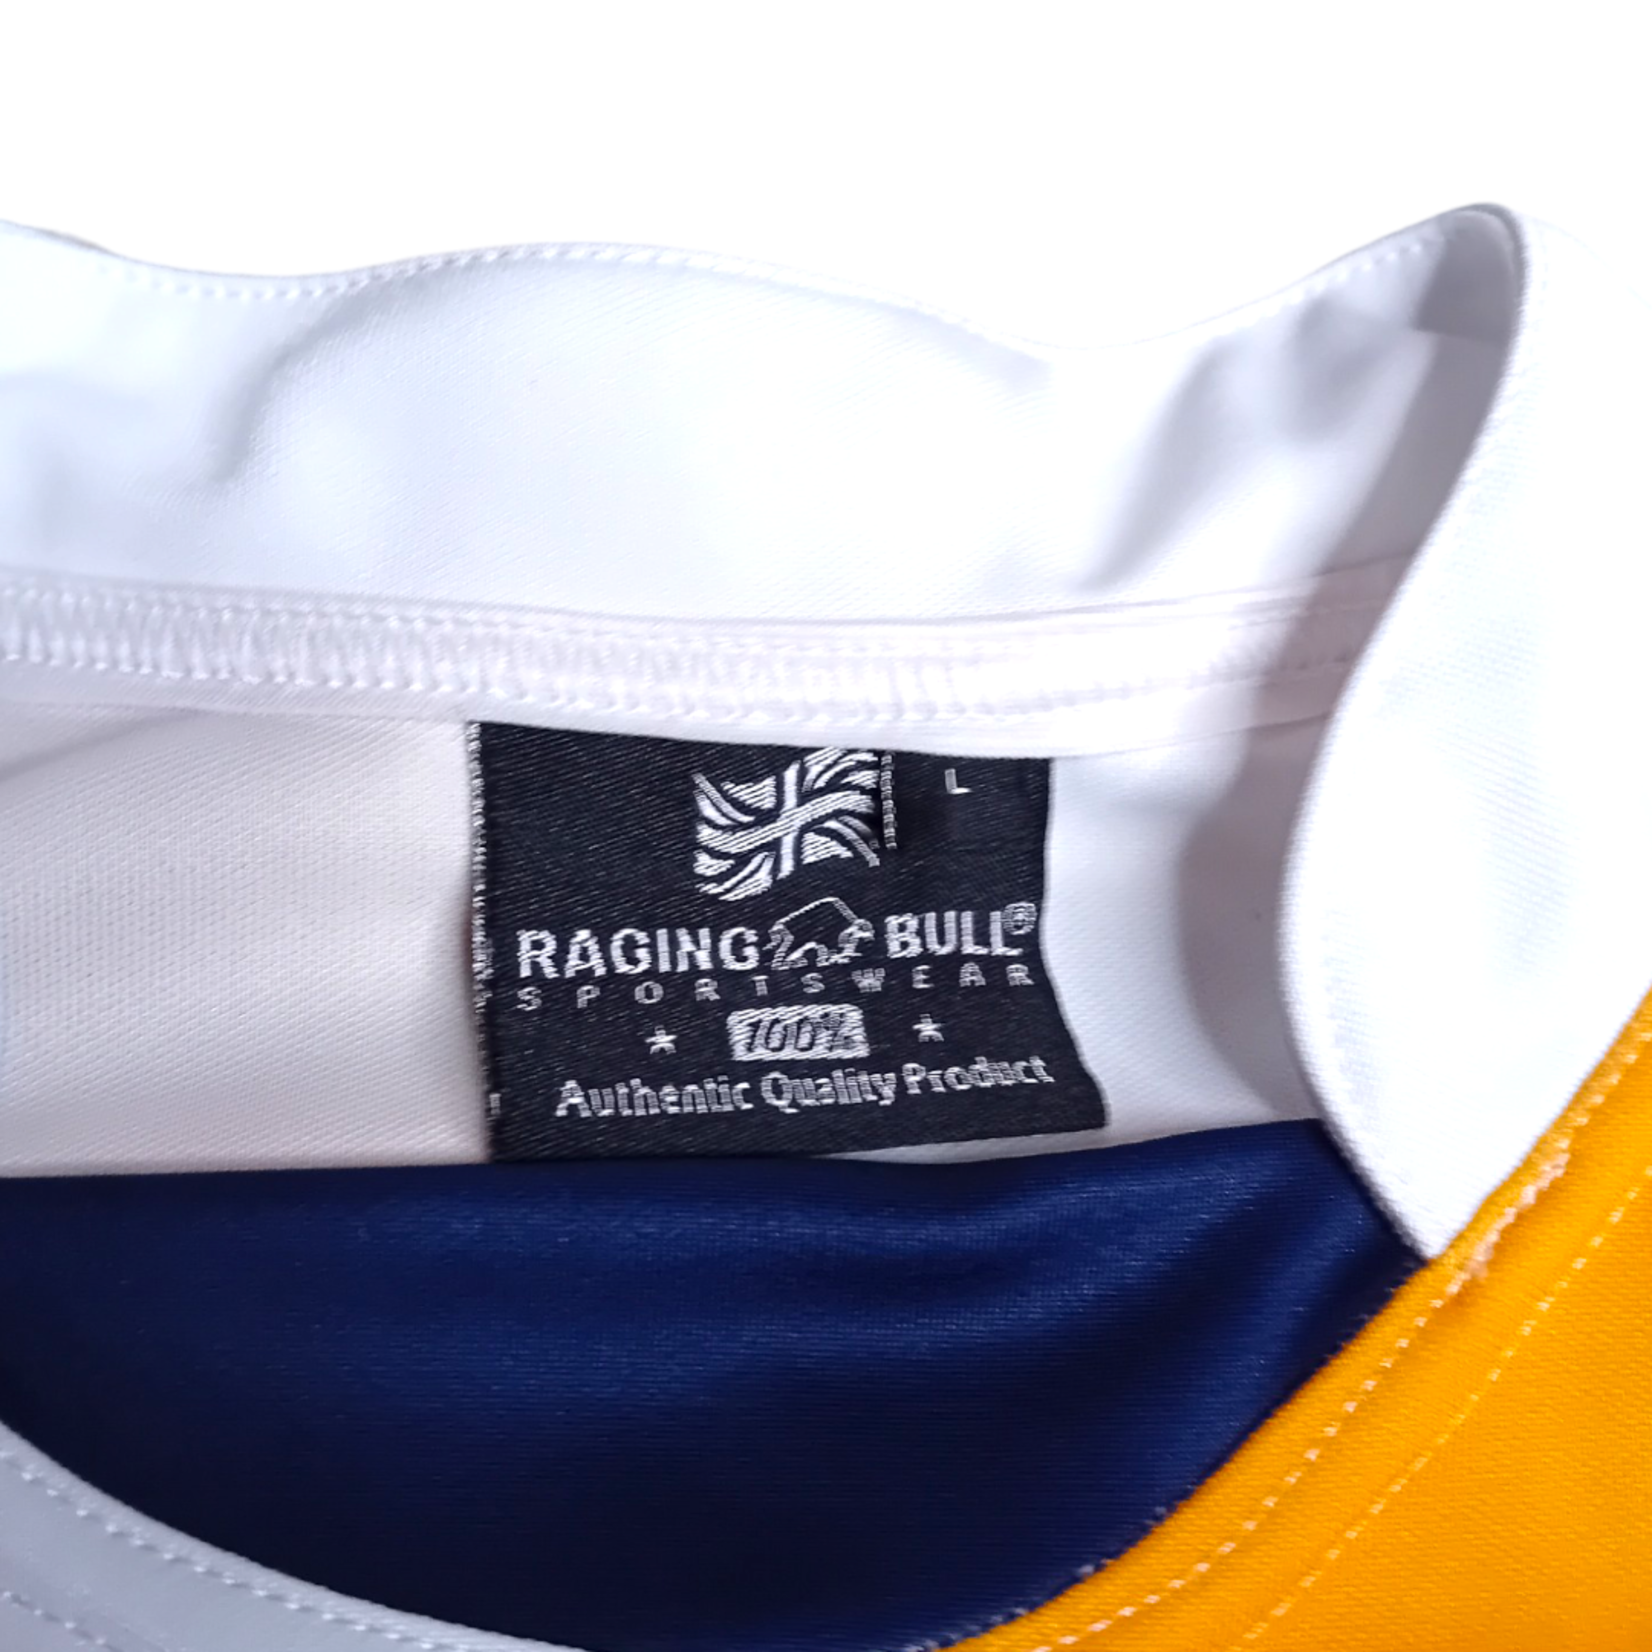 Raging Bull Sportswear Origineel Raging Bull Sportswear vintage rugby shirt Rugby Club Hilversum (Referee)